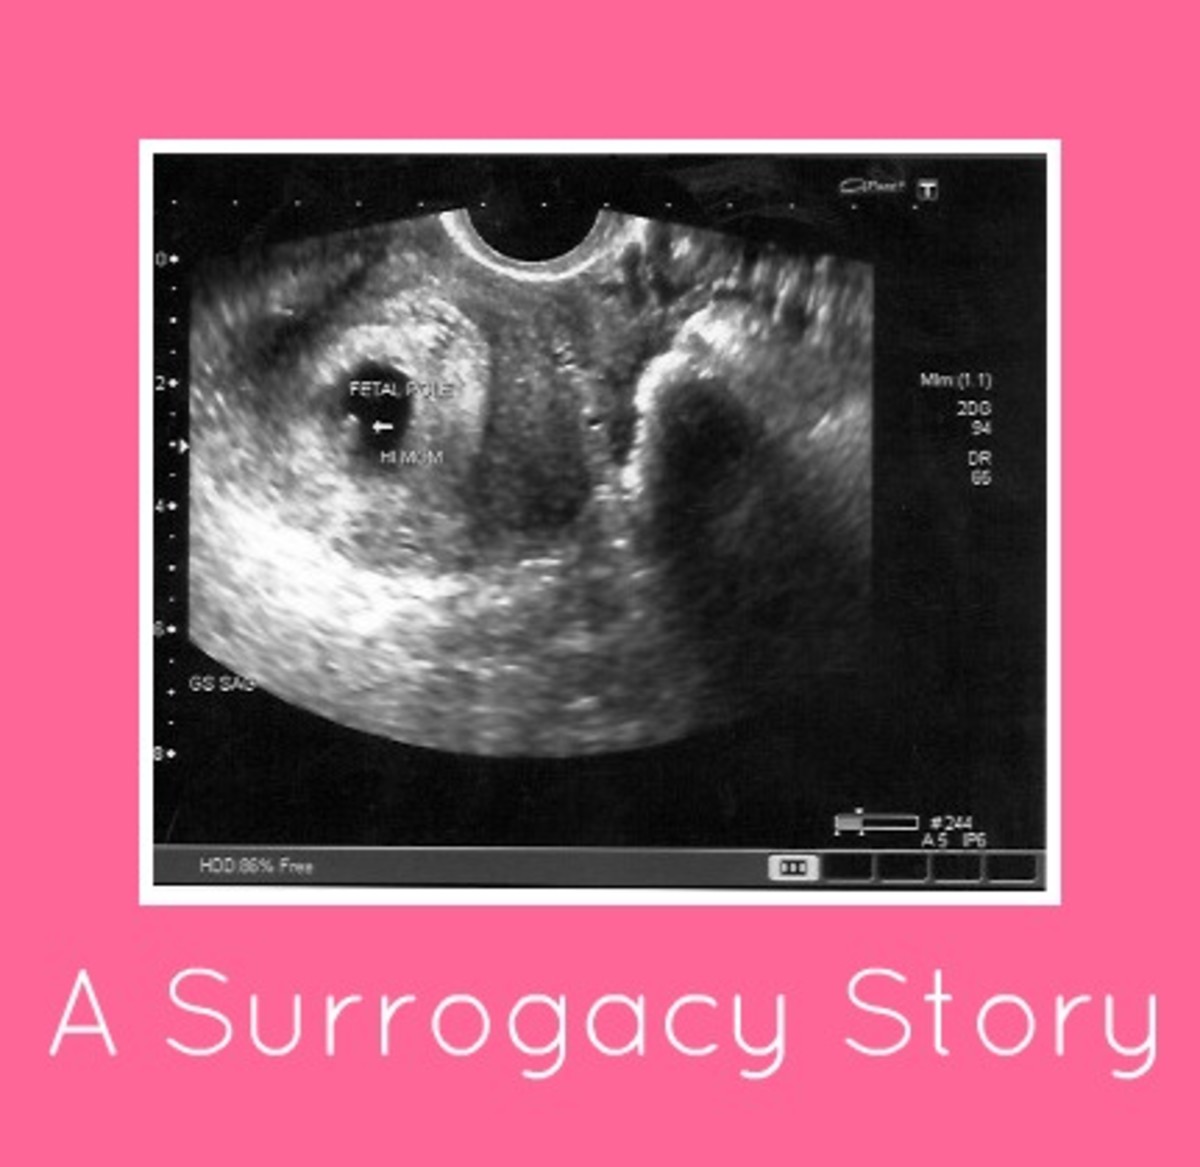 Surrogacy Story